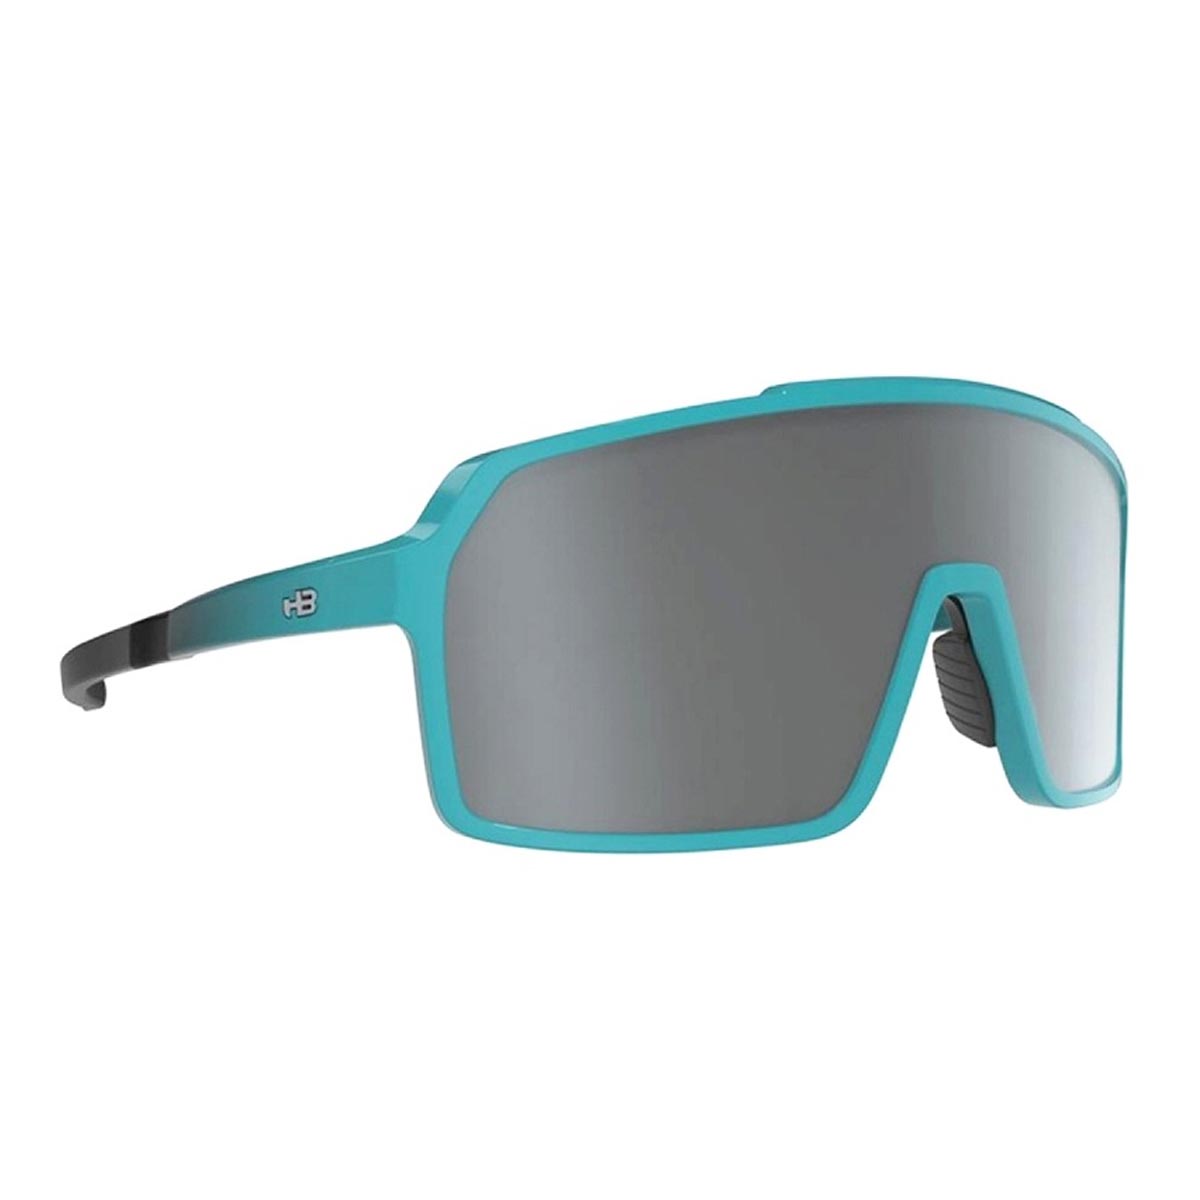 Oculos para Ciclismo HB Grinder Verde Turquesa Gradiente Fosco Lente Silver Espelhada